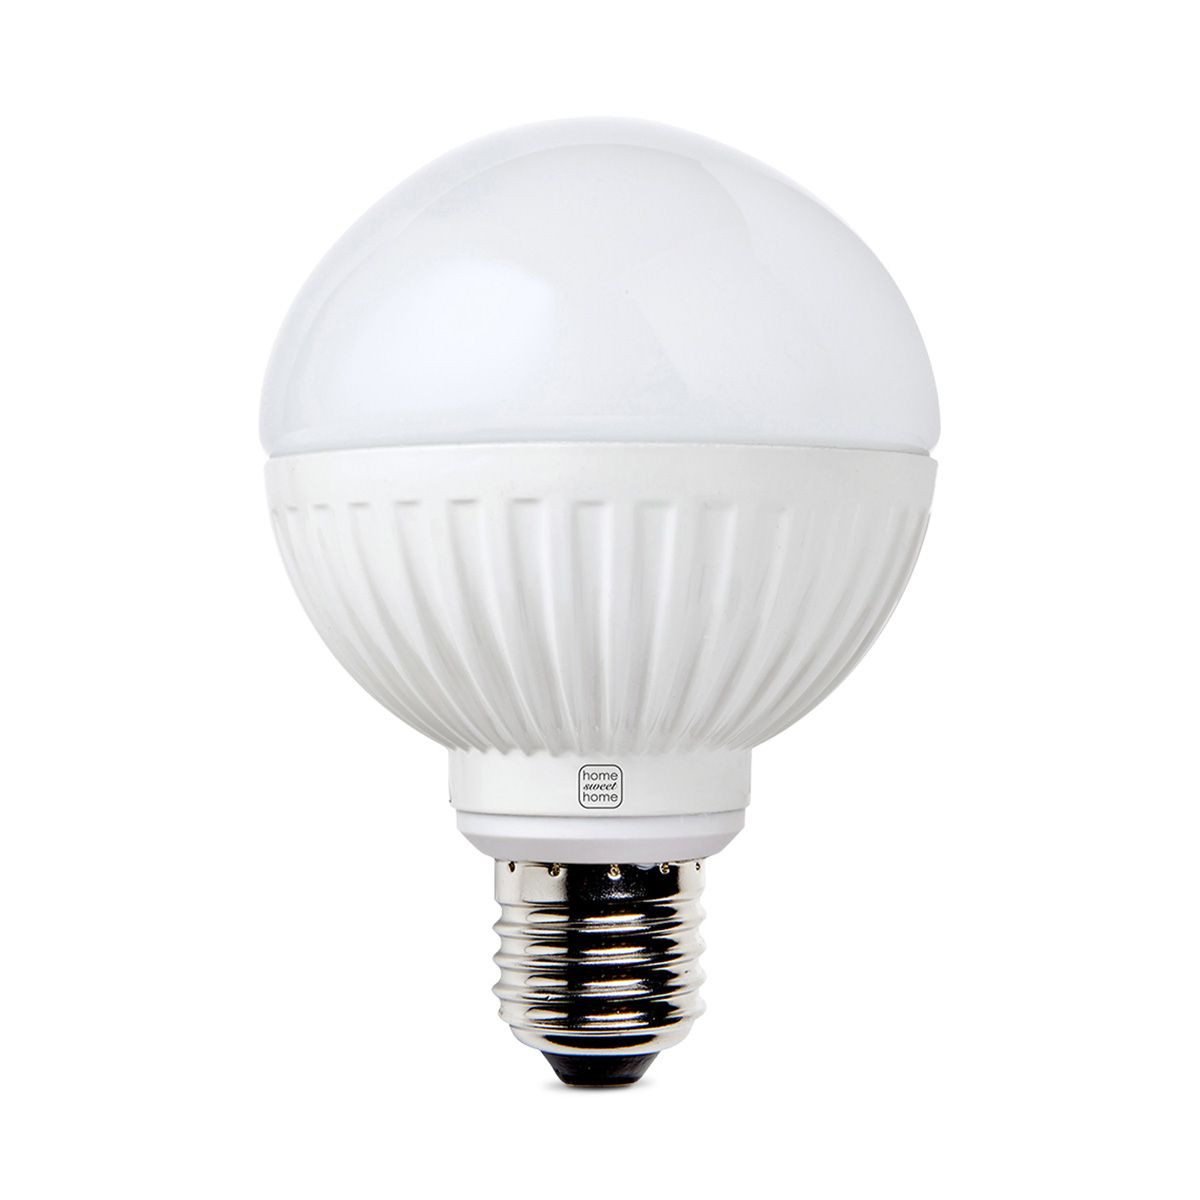 Light depot - LED lamp Globe G80 E27 9W 600Lm 2700K dimbaar - warmwit - Outlet